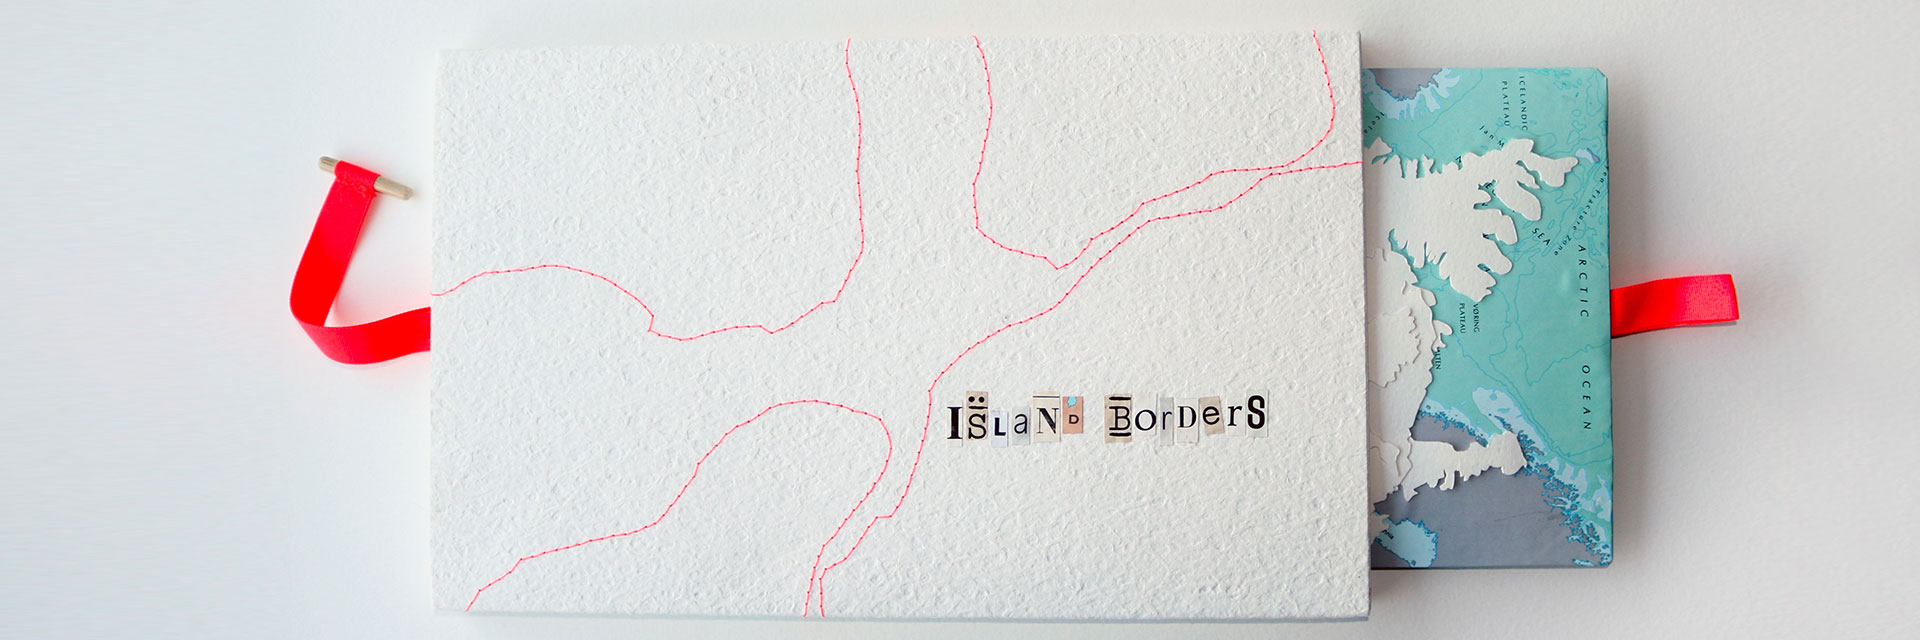 Bryndis Bragadottir, Island Borders, 2016, paper, paper cut, textile, 30 x 18 cm.